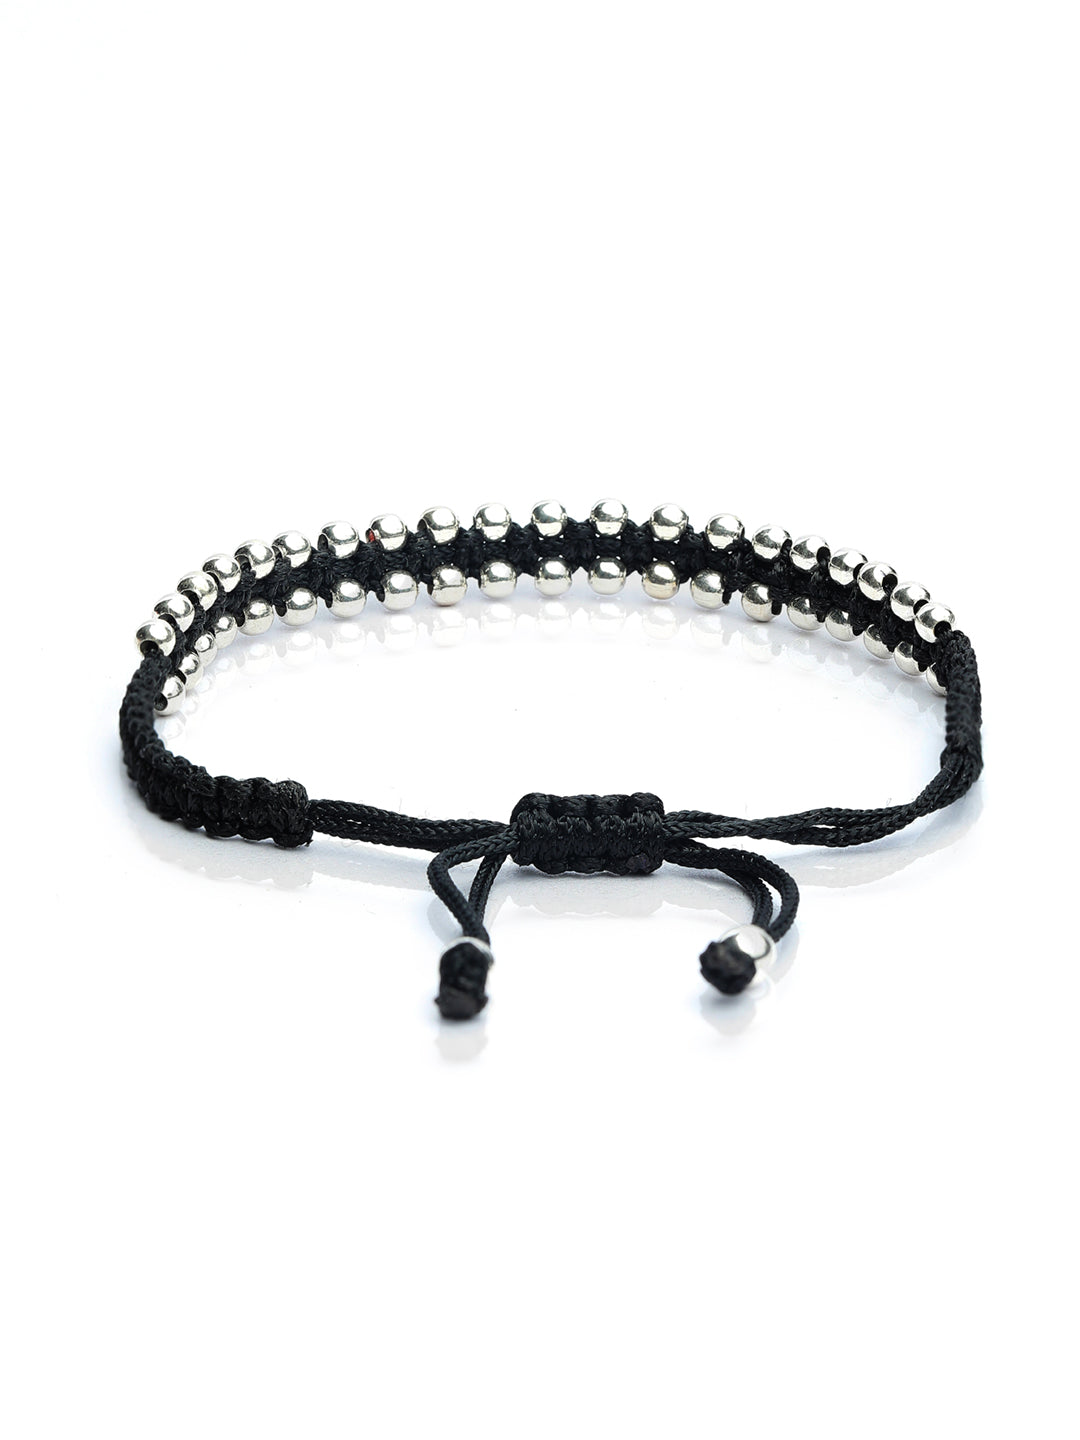 Flower motif and Rudraksh beads adjustable black thread bracelet in pure  silver